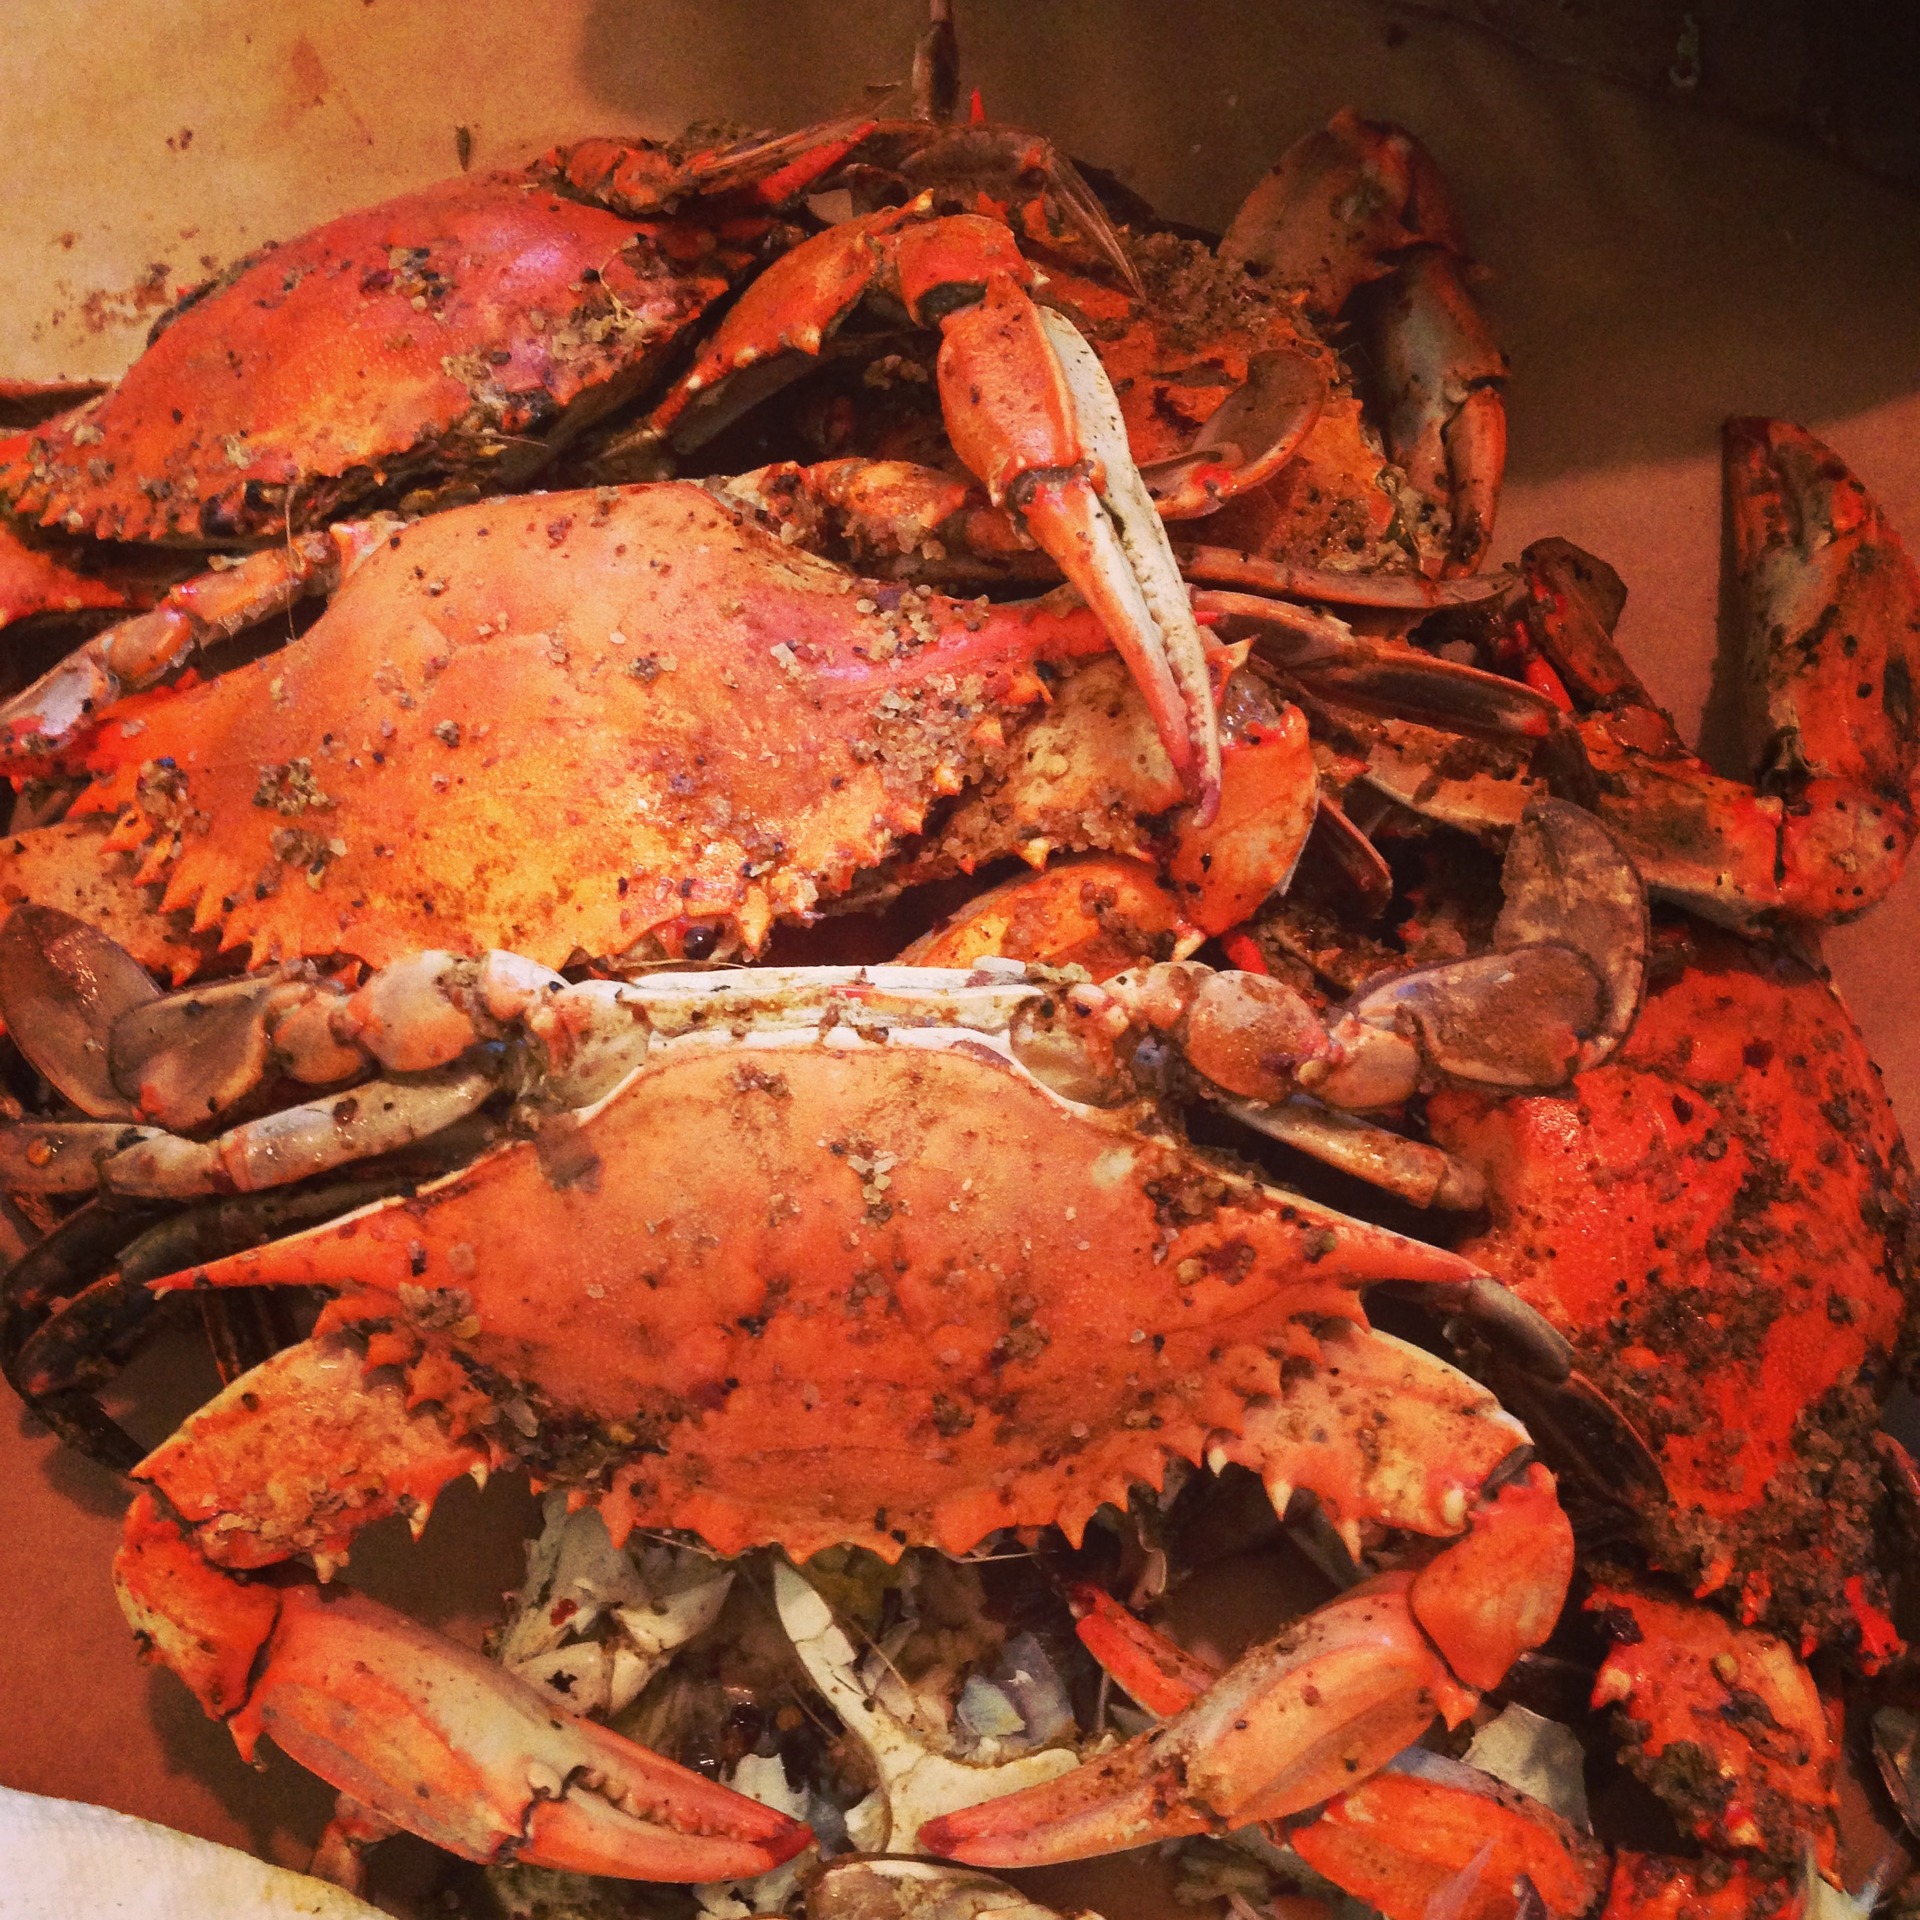 Baltimore's crabs